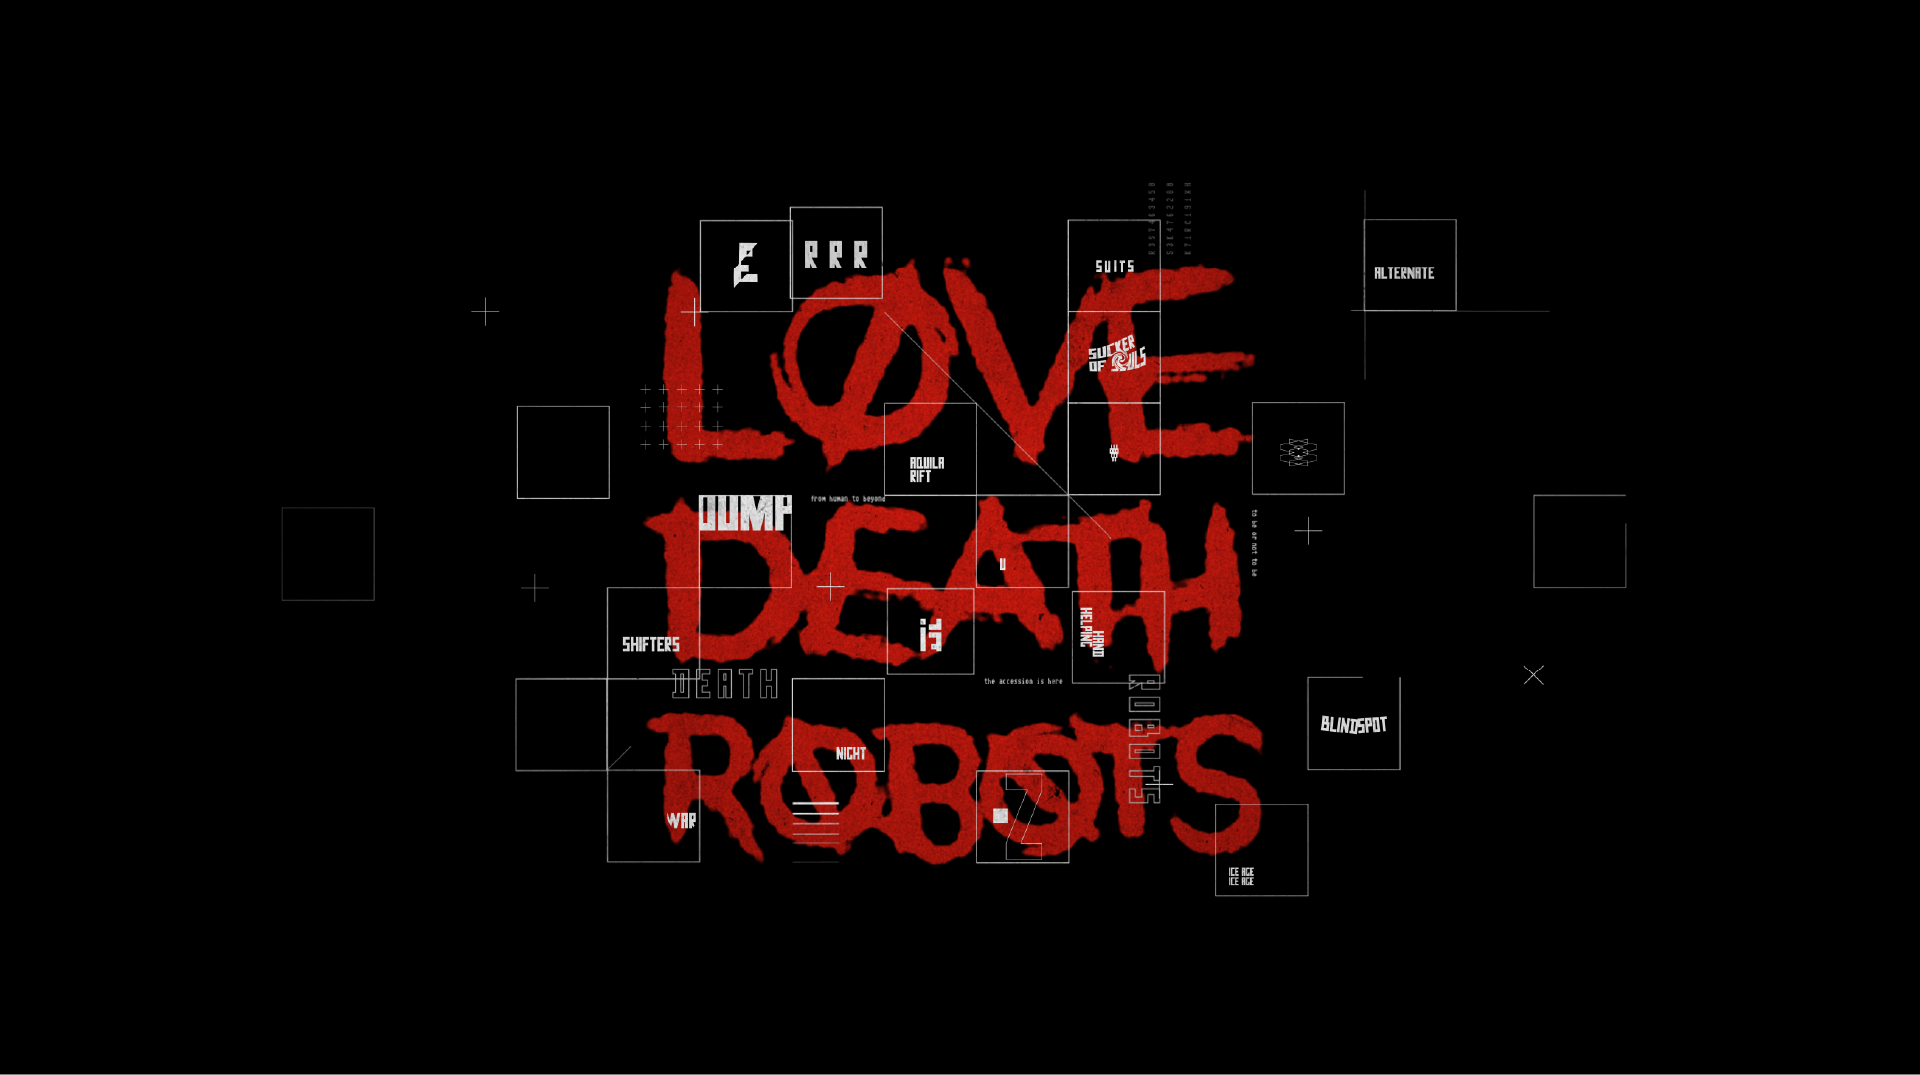 Love Death Robots